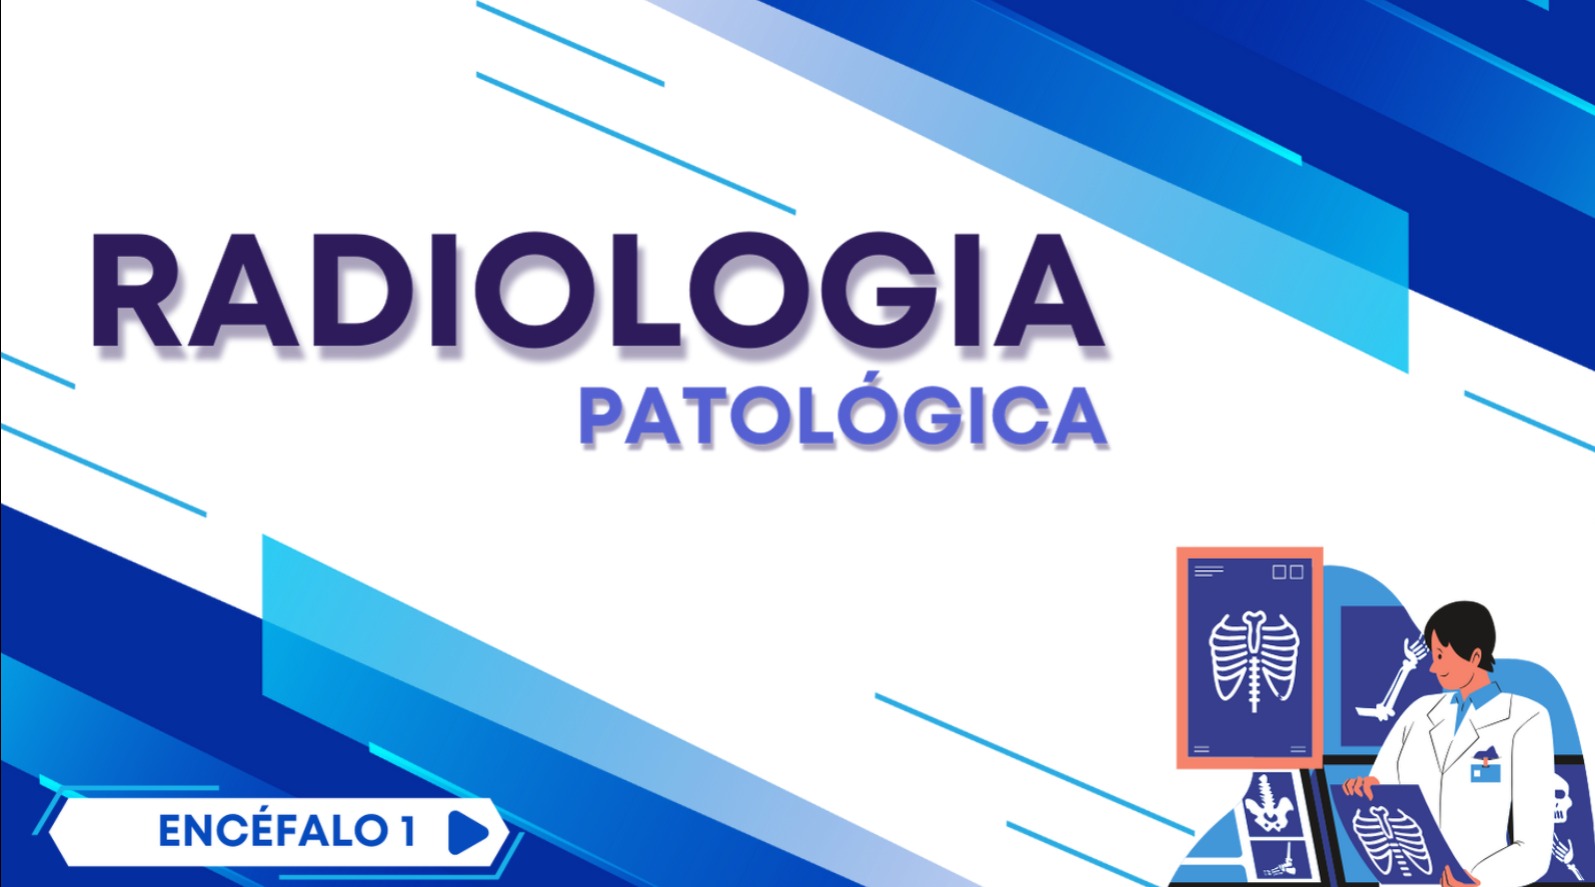 Radiologia Patológica - Encefalo 1